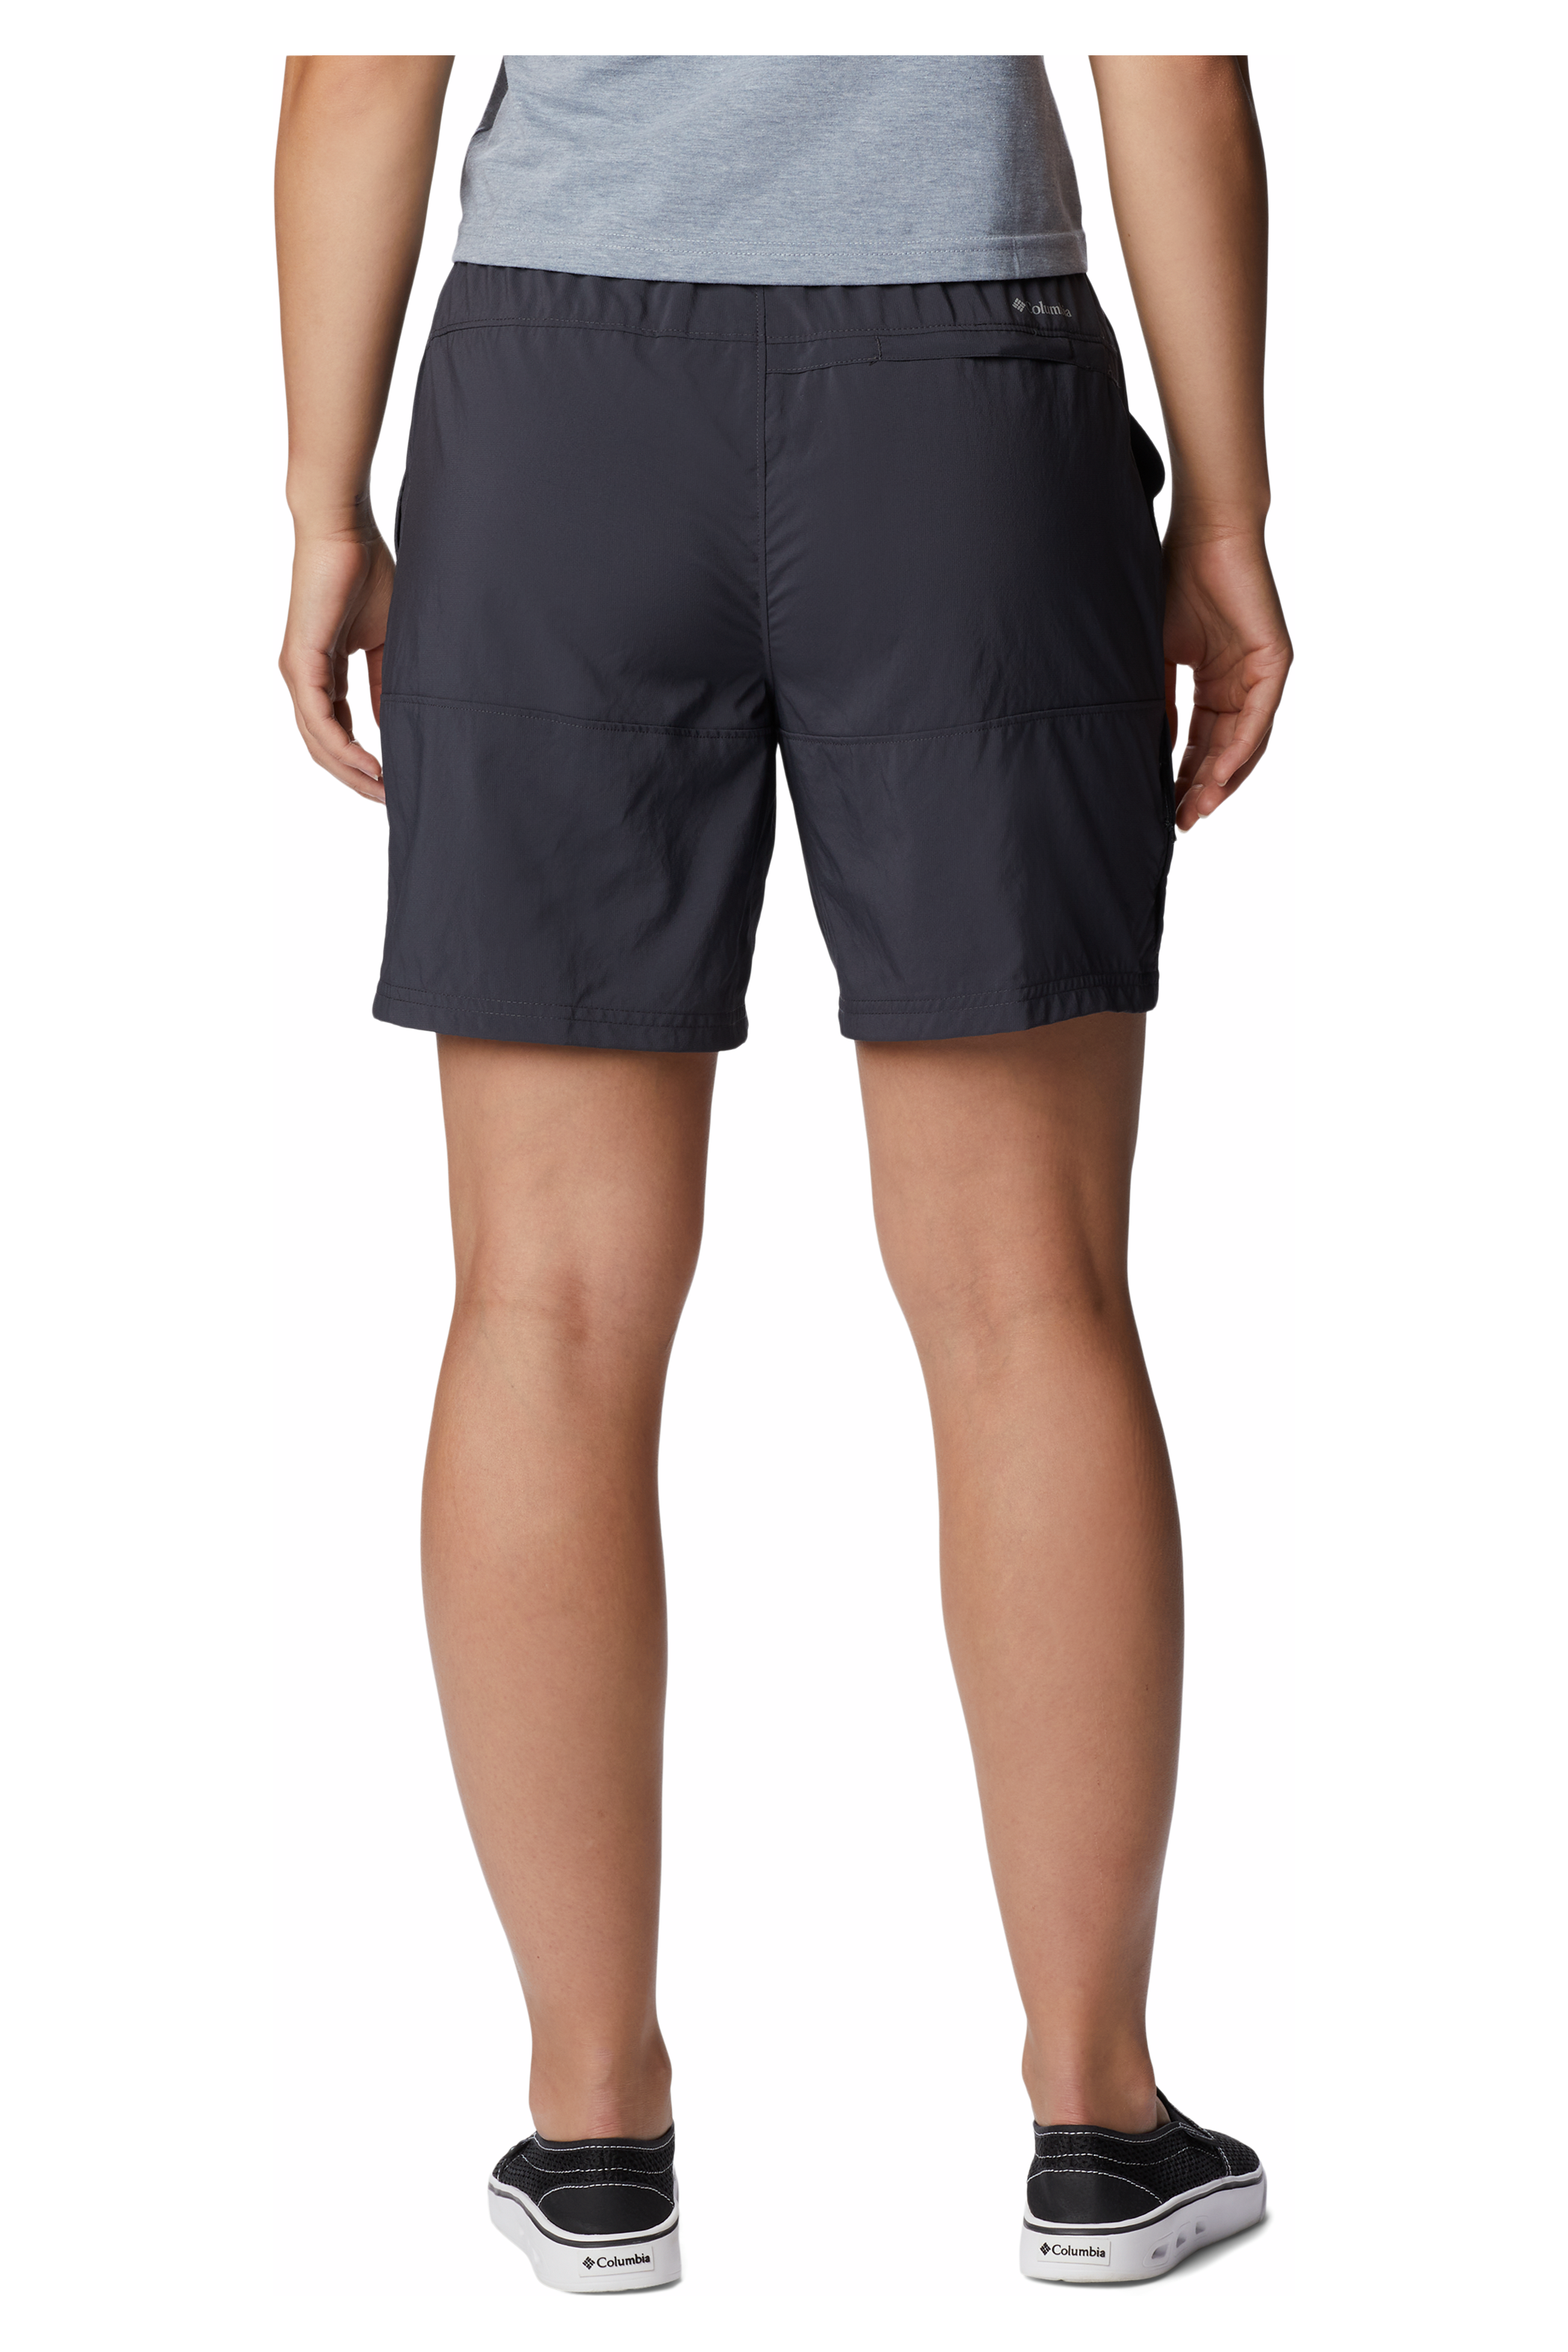 Columbia Coral Ridge Shorts - Style 2037451, back2, shark heather